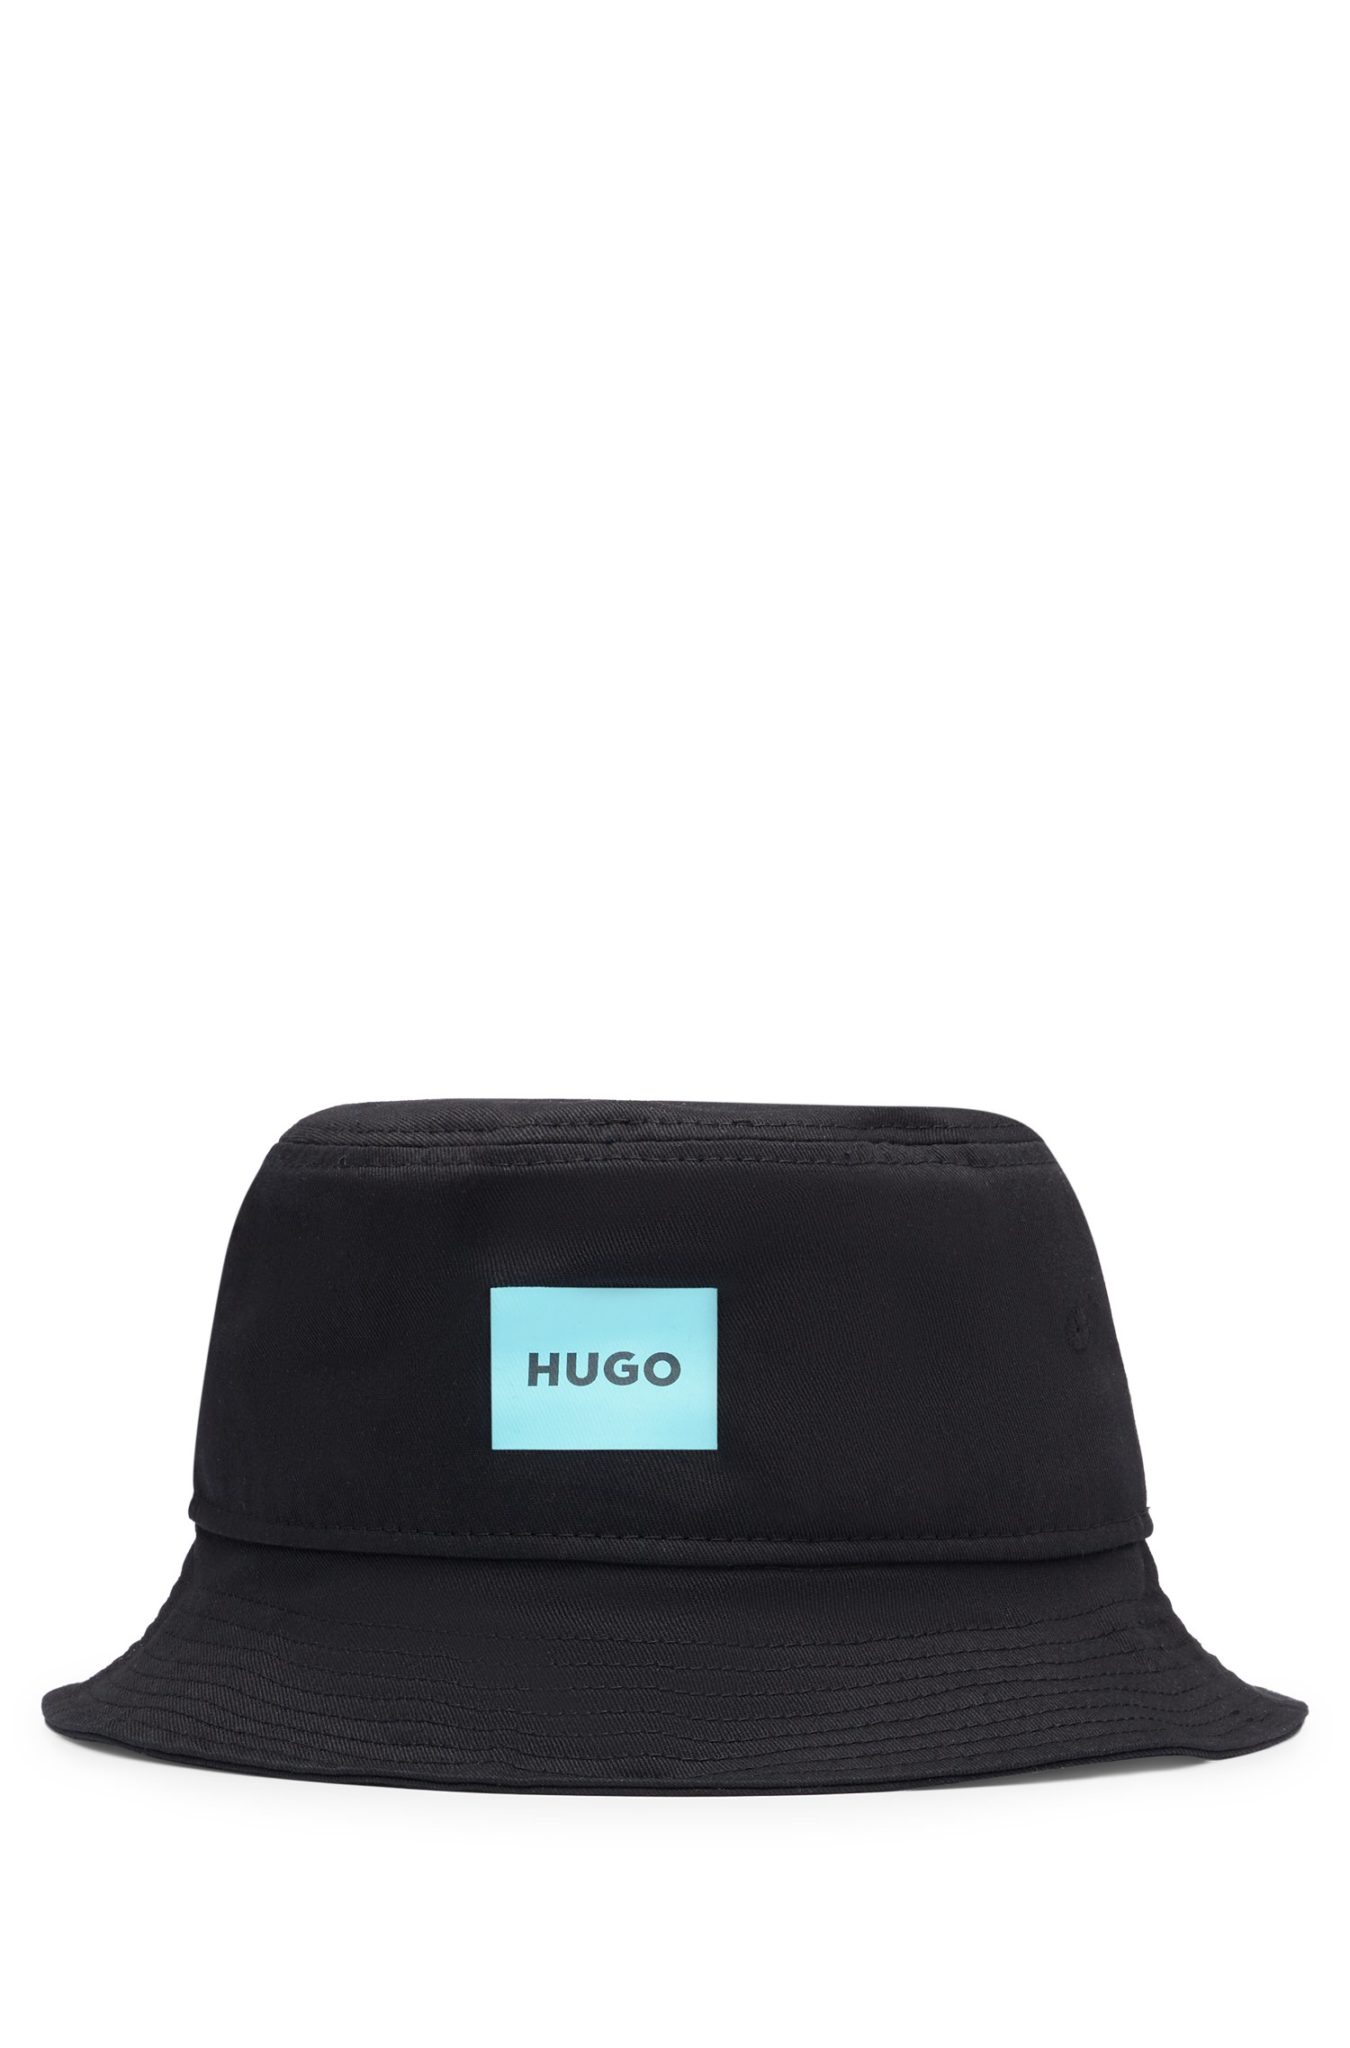 Hugo Boss Bob en twill de coton avec étiquette logo